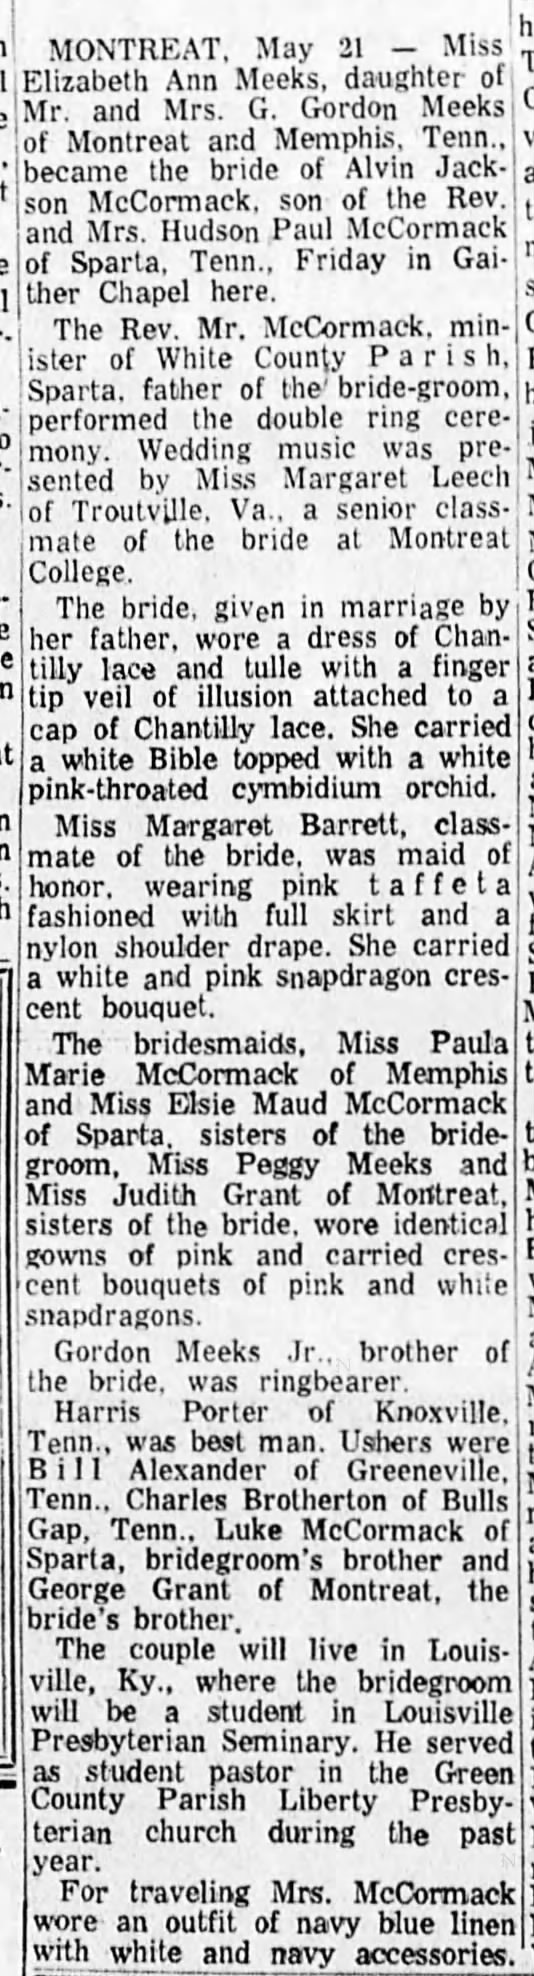 Margaret Jenkins played organ for classmate's wedding